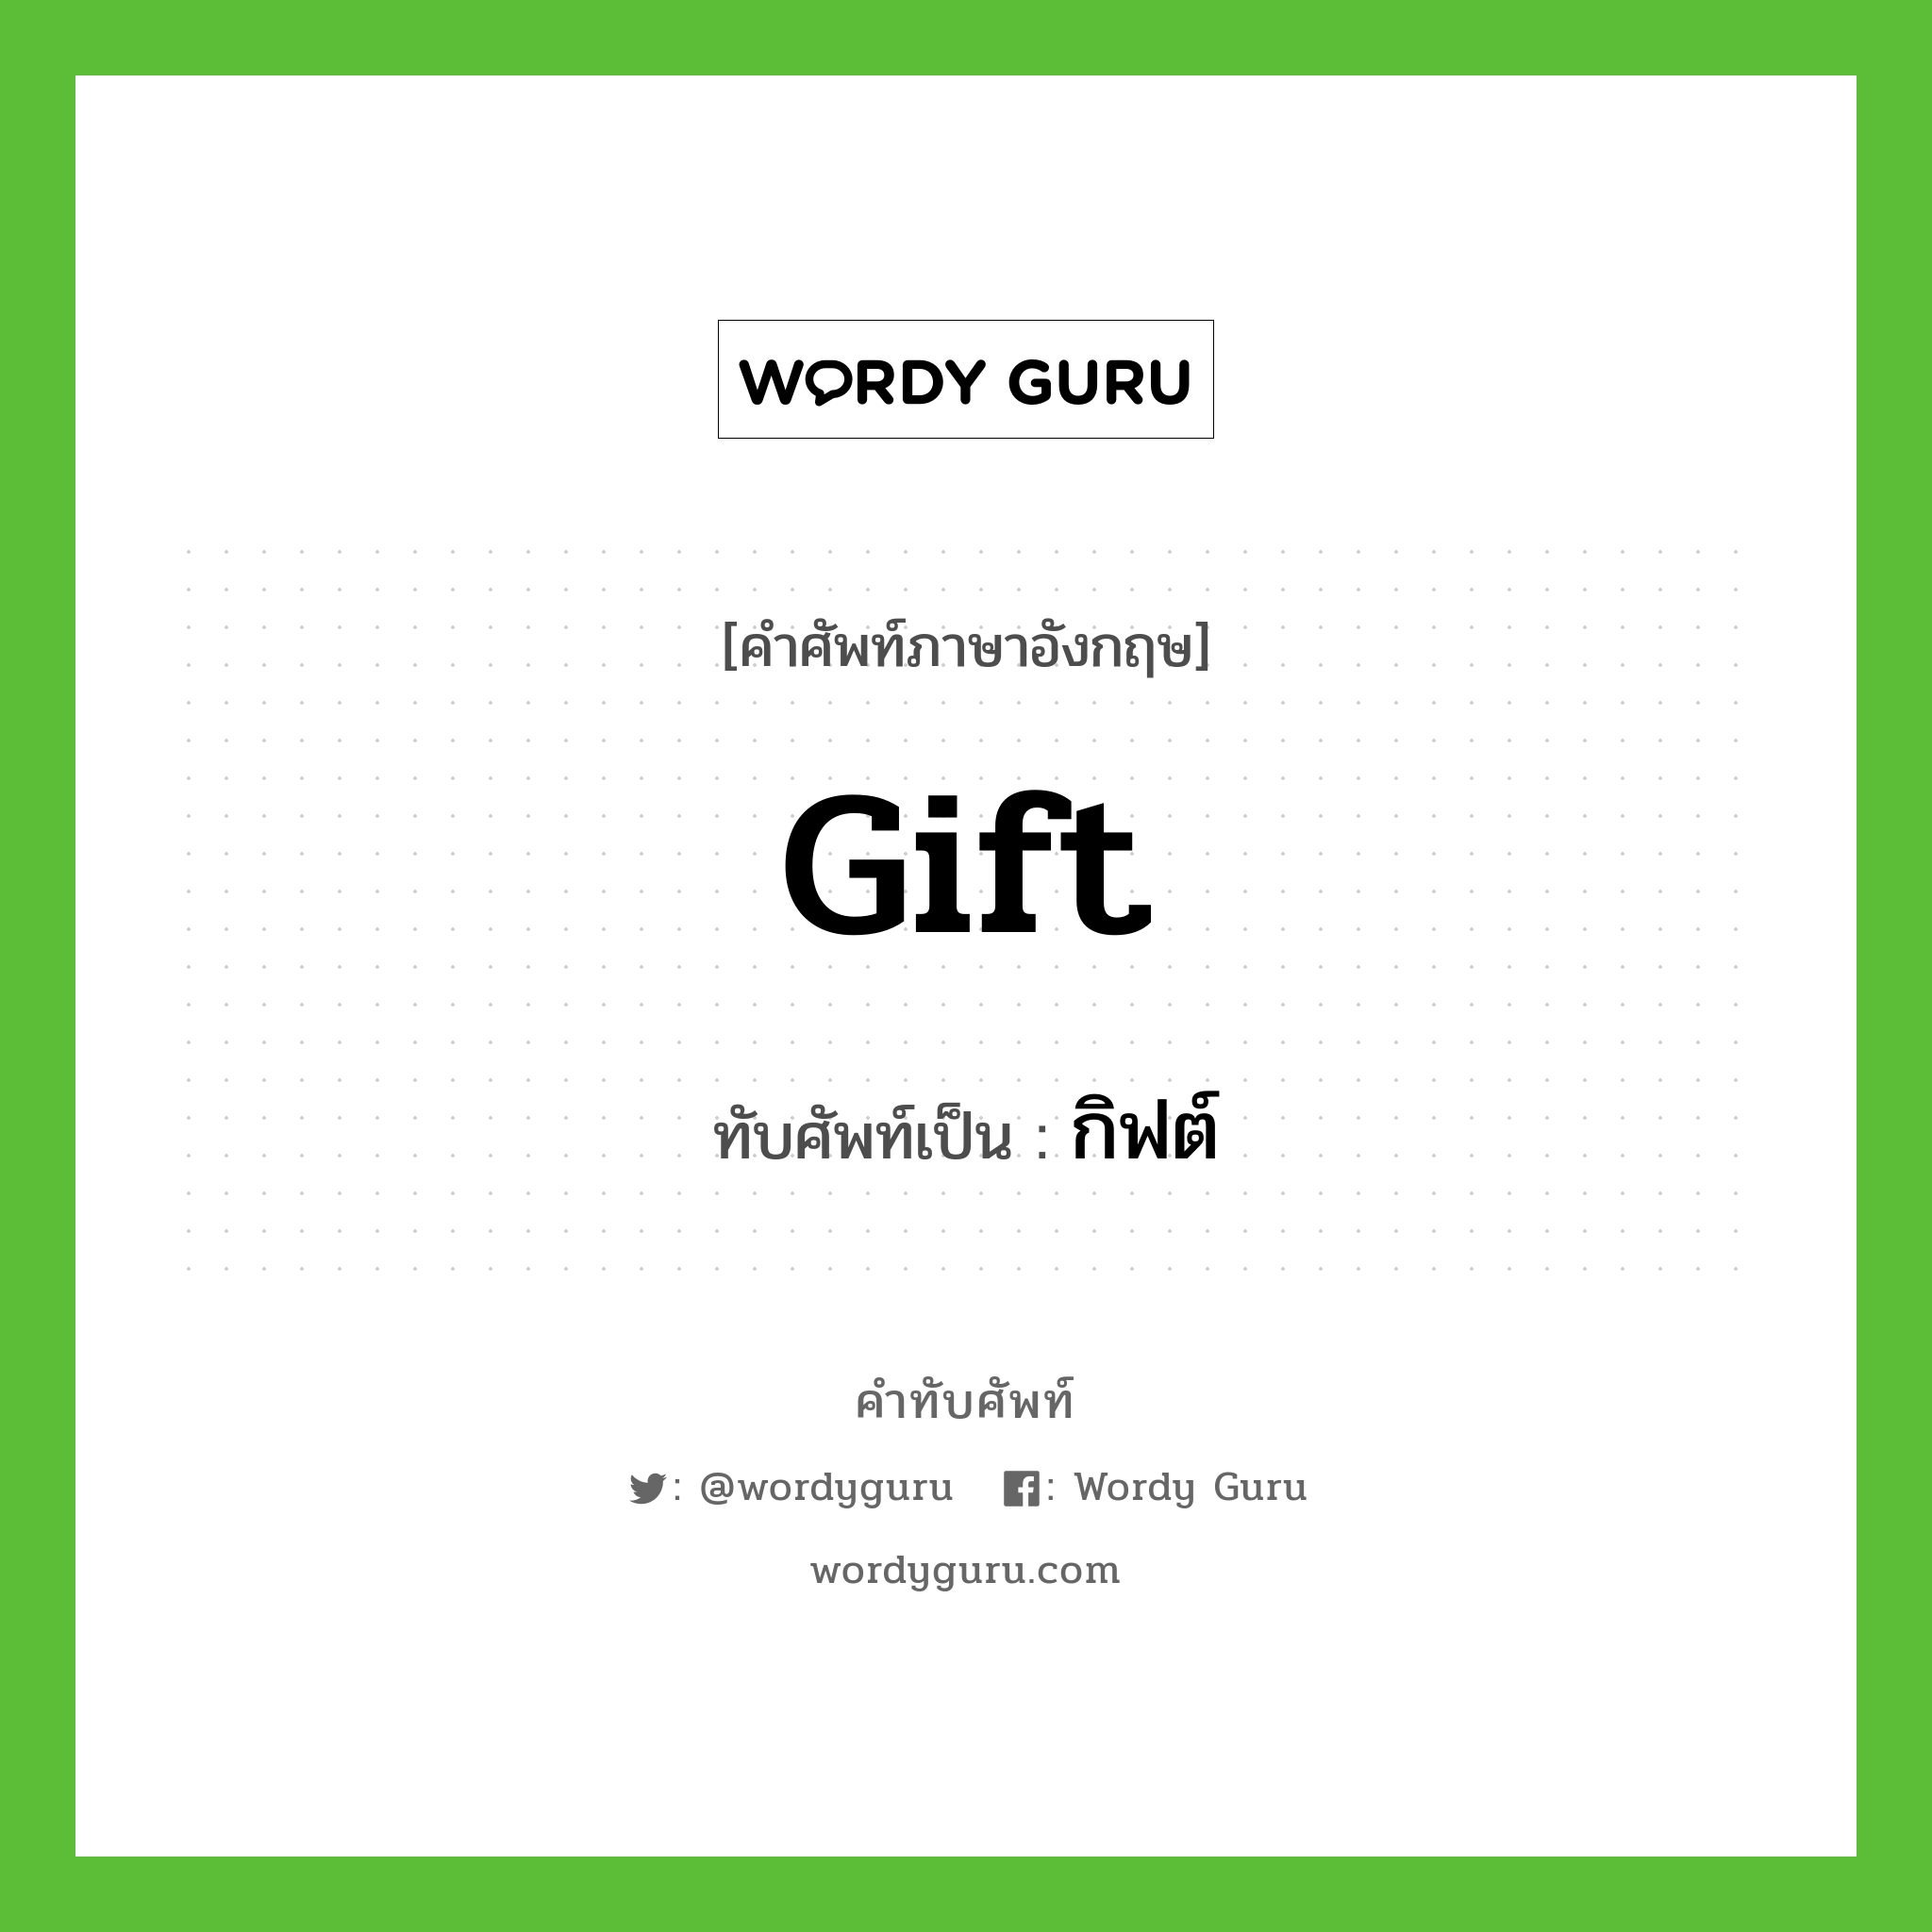 gift เขียนเป็นคำไทยว่าอะไร?, คำศัพท์ภาษาอังกฤษ gift ทับศัพท์เป็น กิฟต์